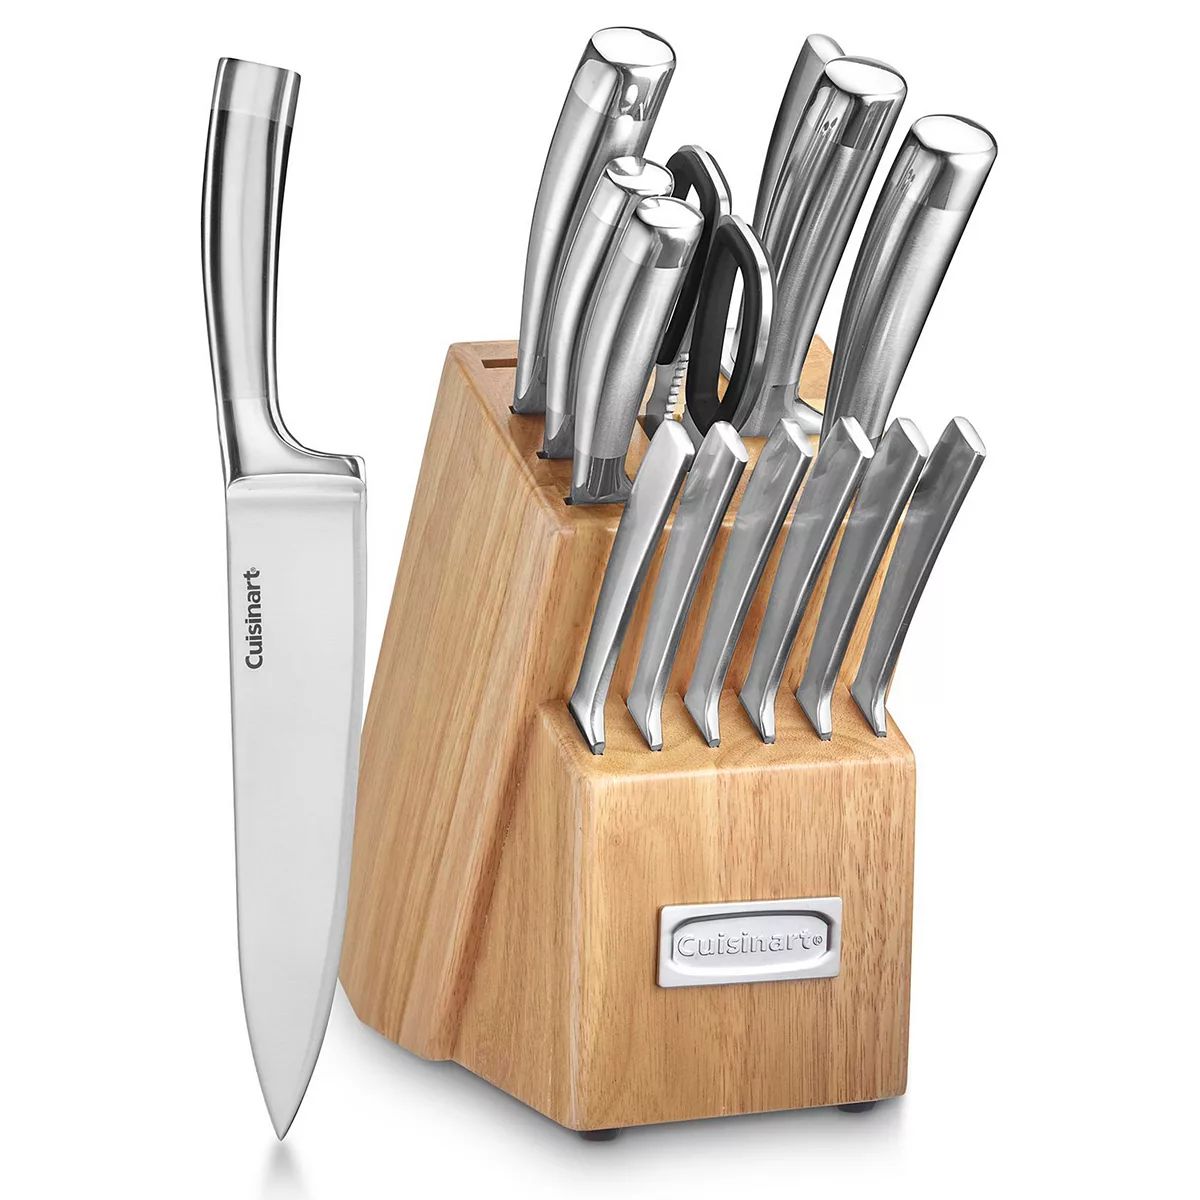 Cuisinart® Professional Series 15-pc. Knife Block Set | Kohl's